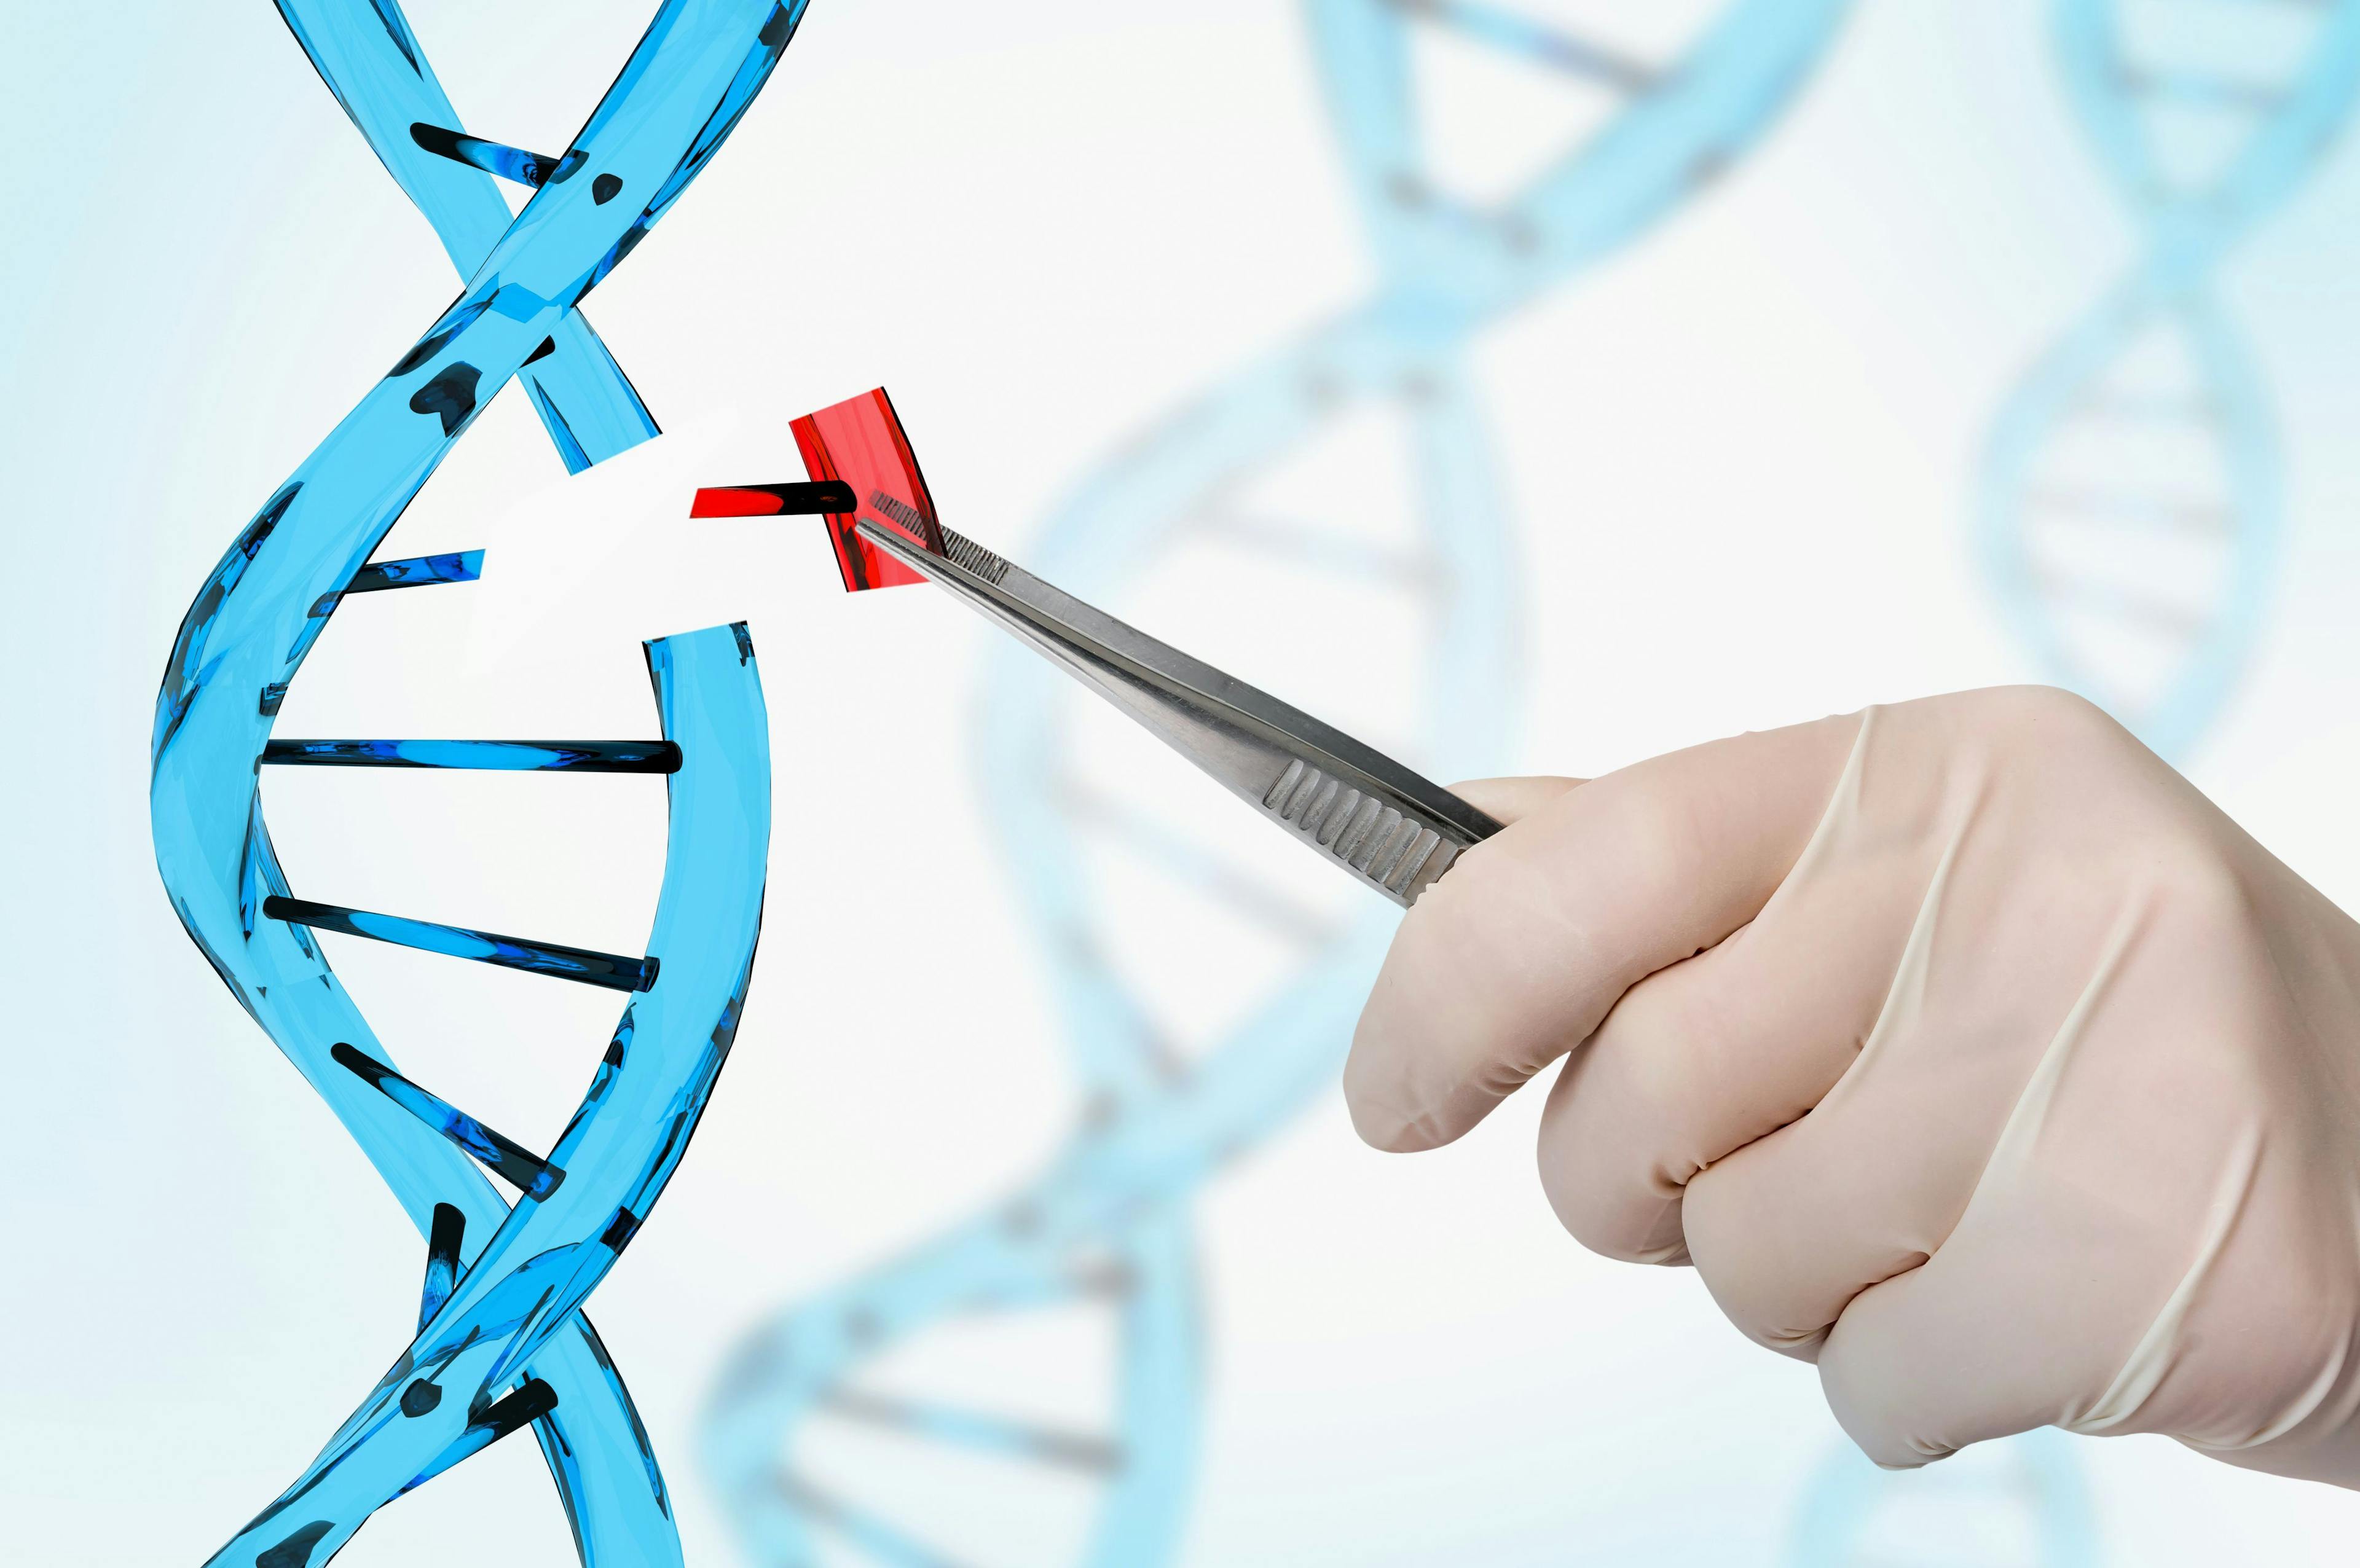 Genetic engineering and gene manipulation concept | Image Credit: andrianocz - stock.adobe.com